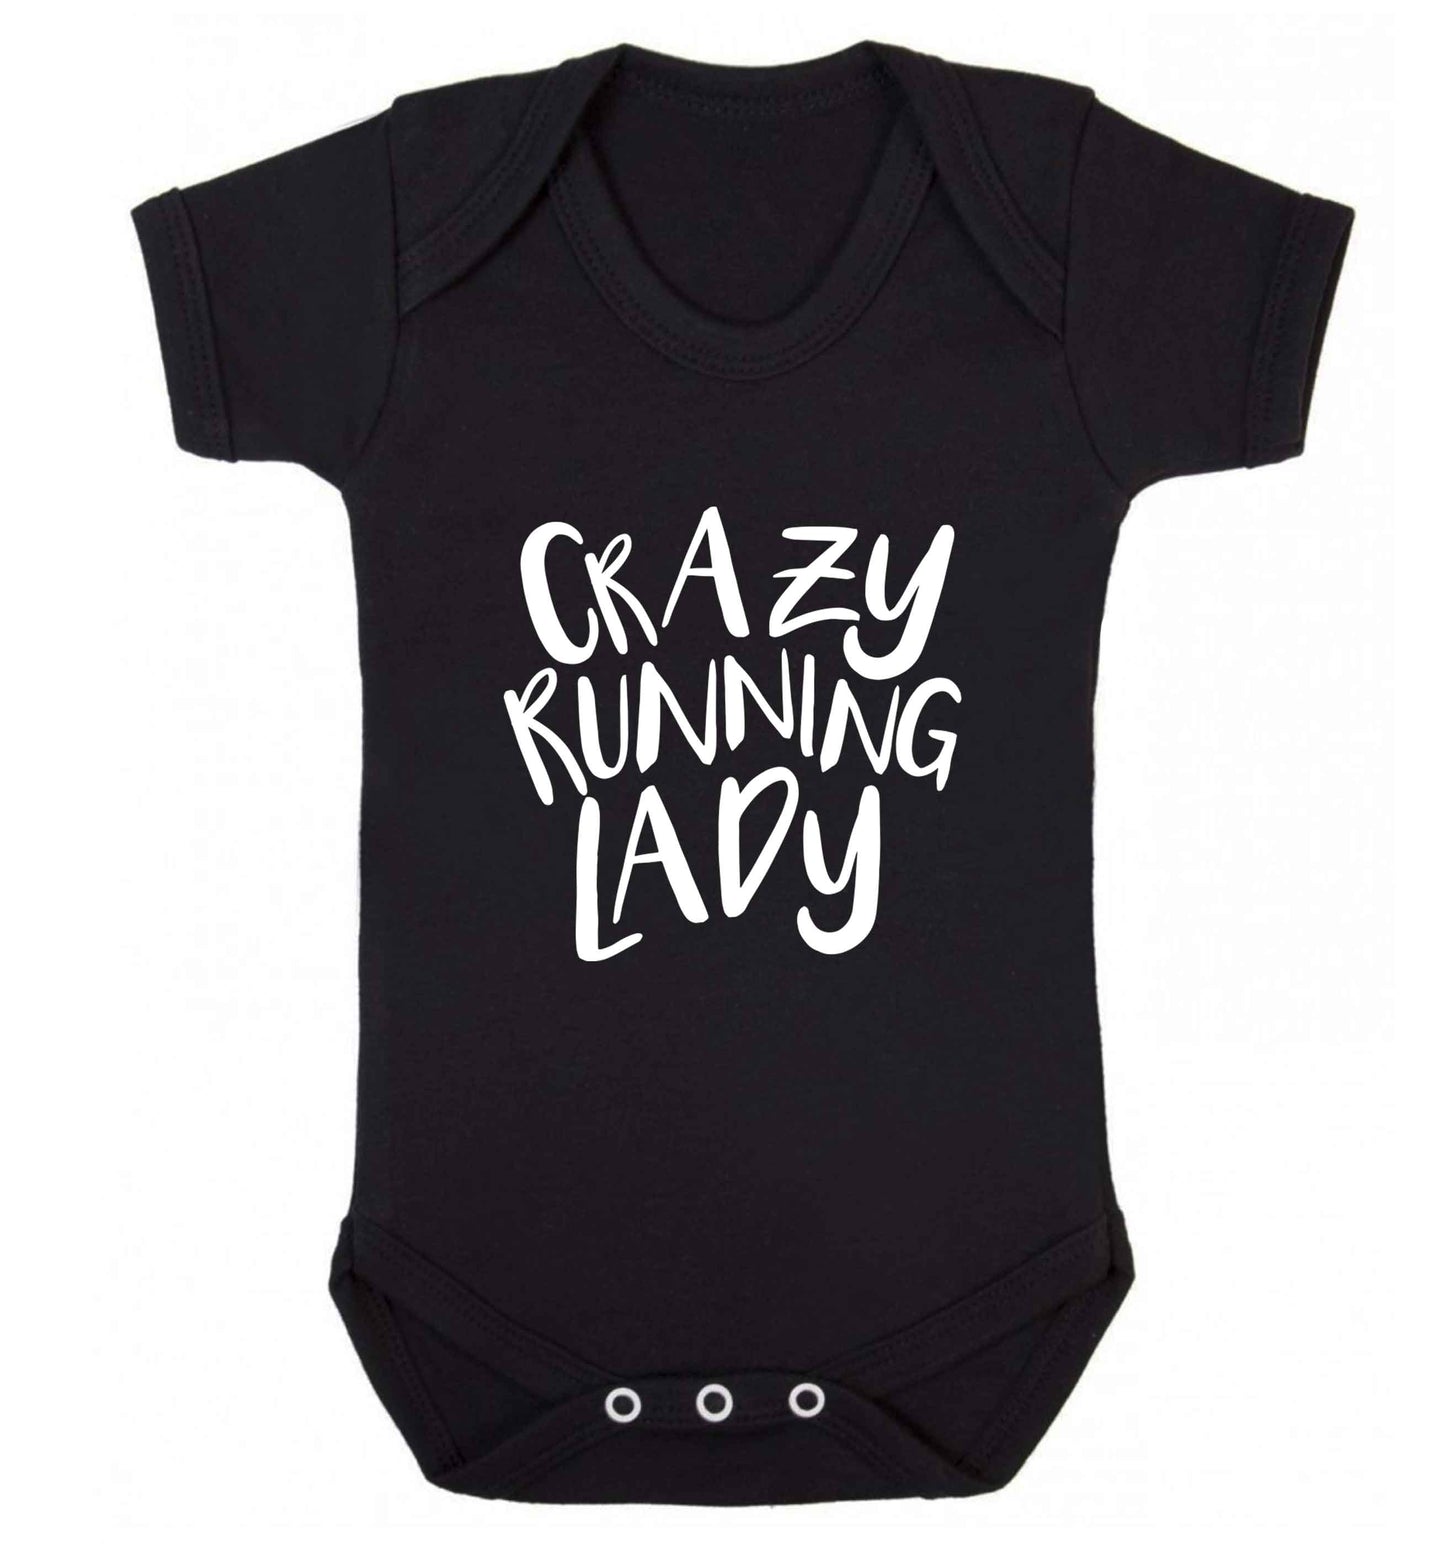 Crazy running lady baby vest black 18-24 months